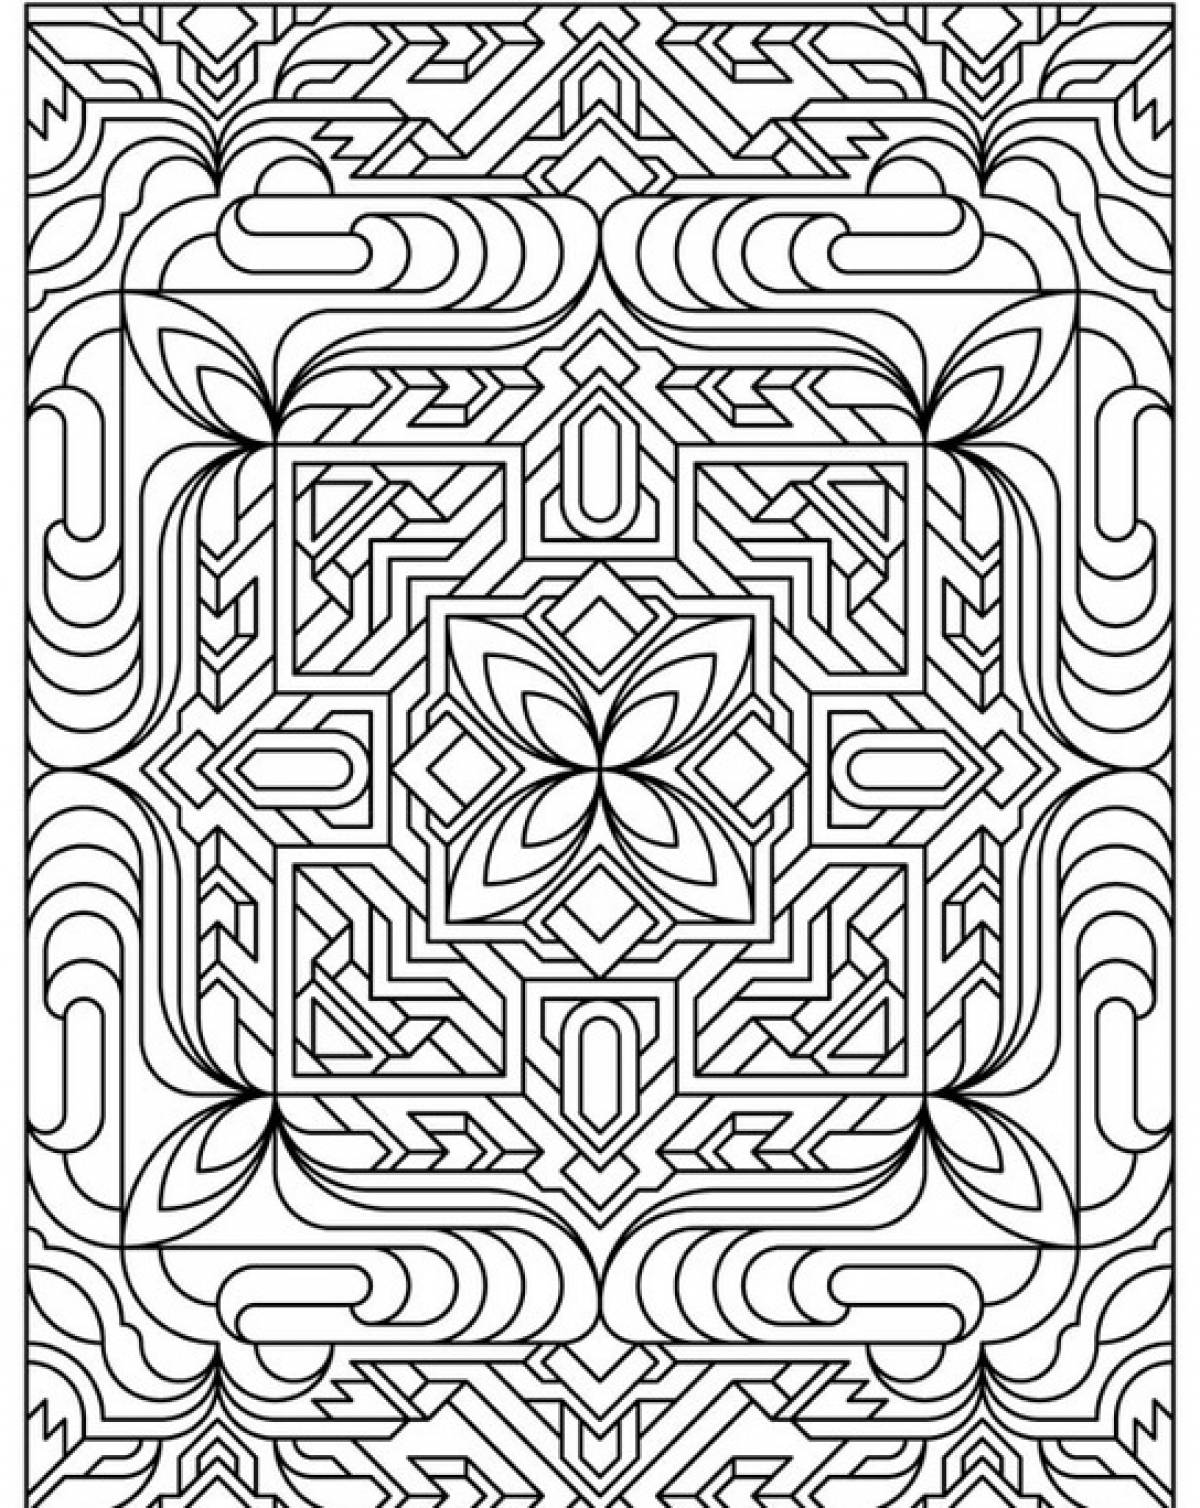 Carpet pattern